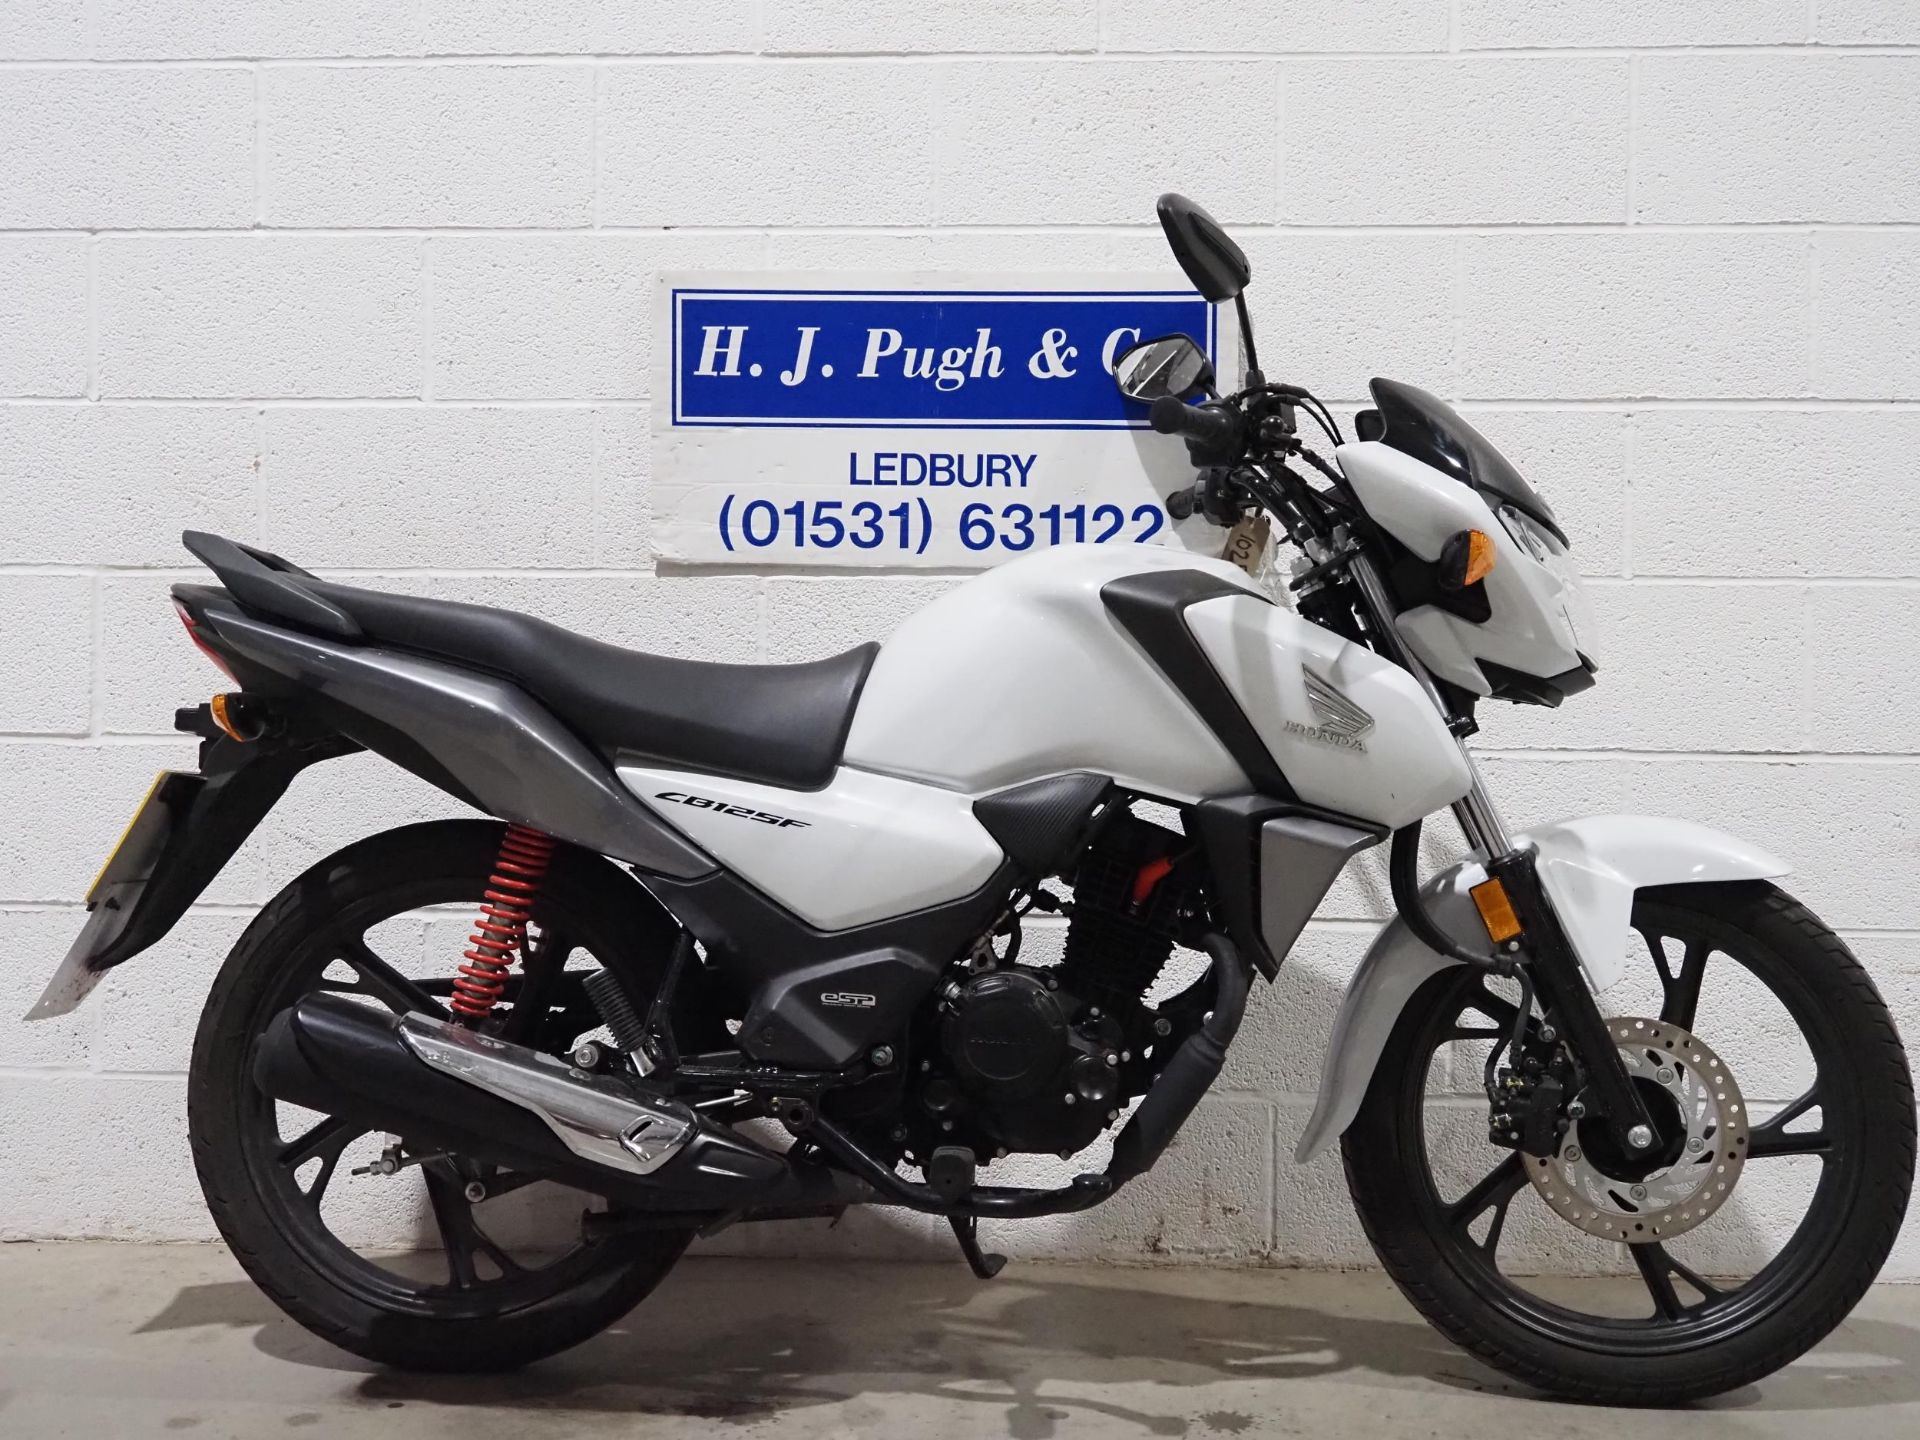 Honda CBF125 motorcycle. 2022. 124cc. Runs and rides. Recent service Comes with wheel lock,